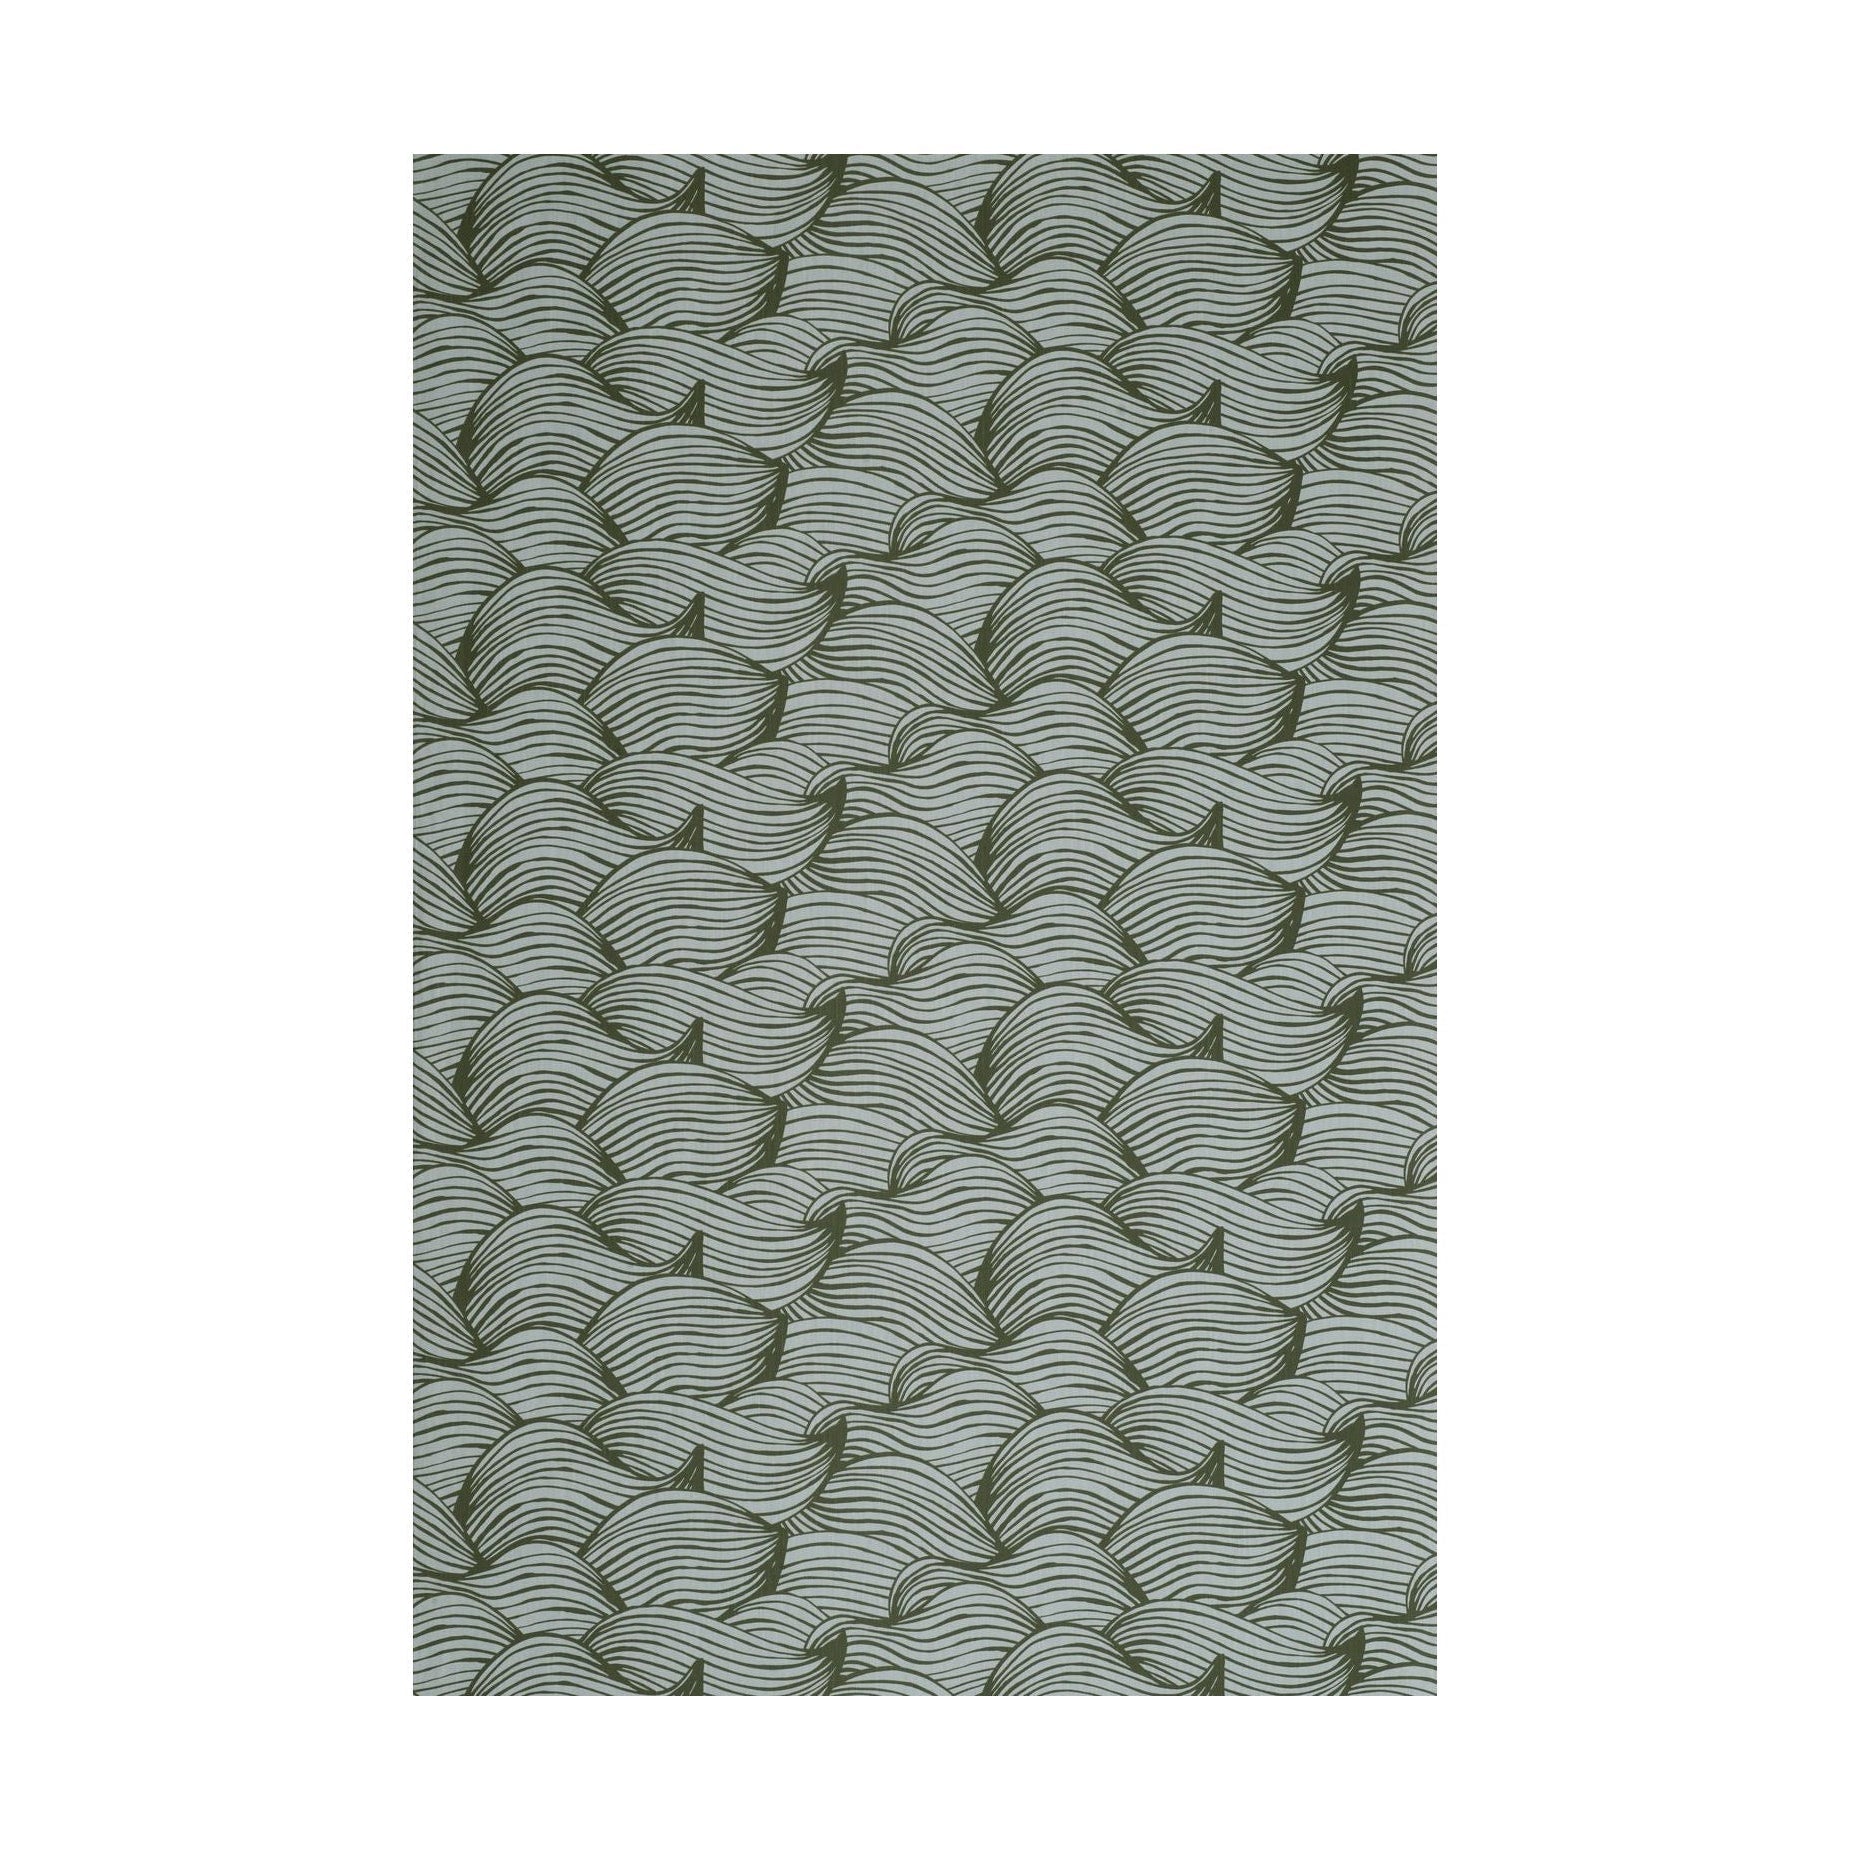 Spira Wave Fabric Width 150 Cm (Price Per Meter), Green